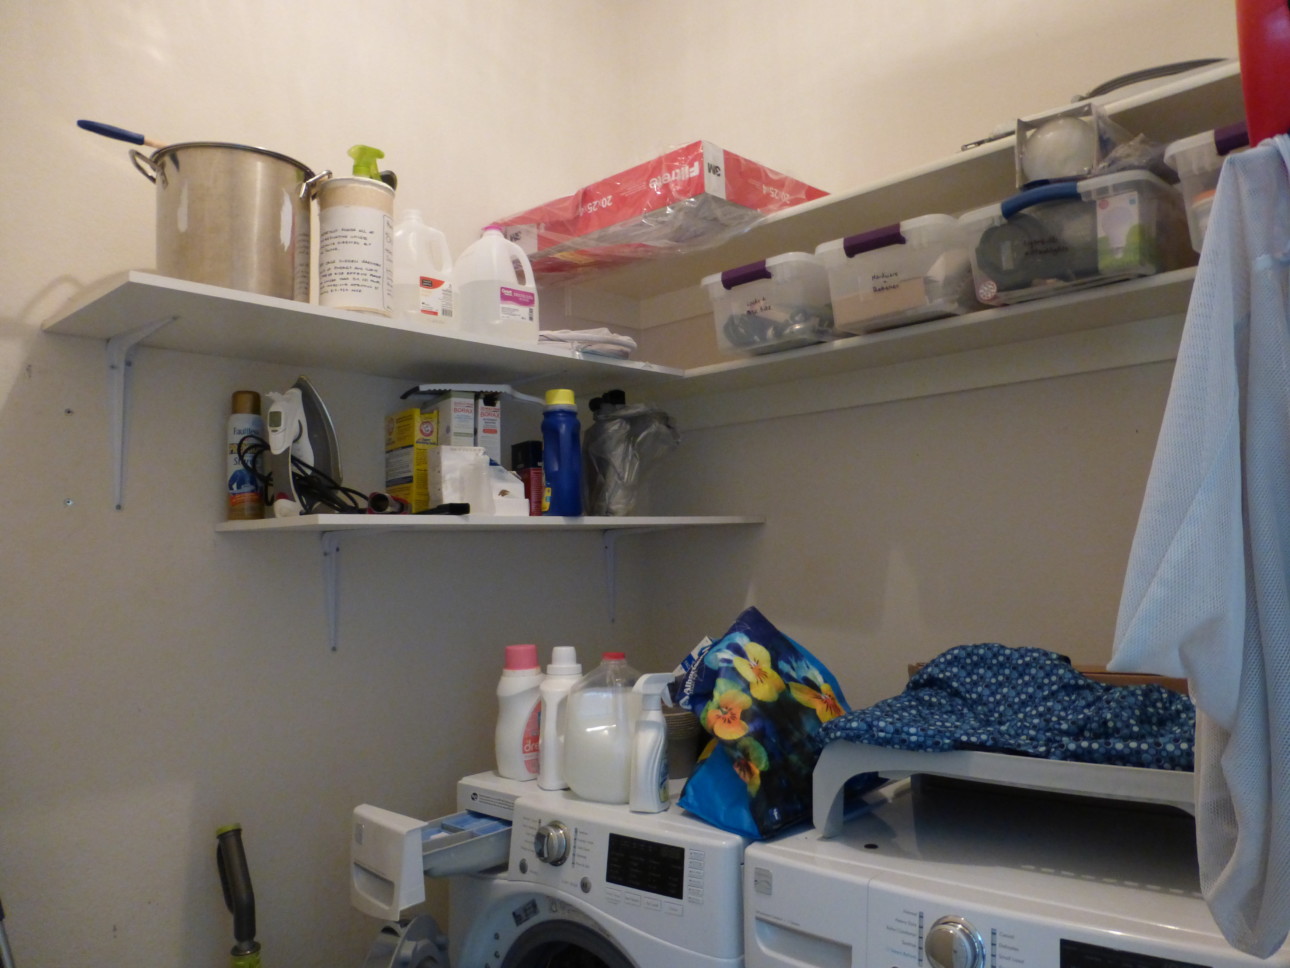 organized laundry room shelves